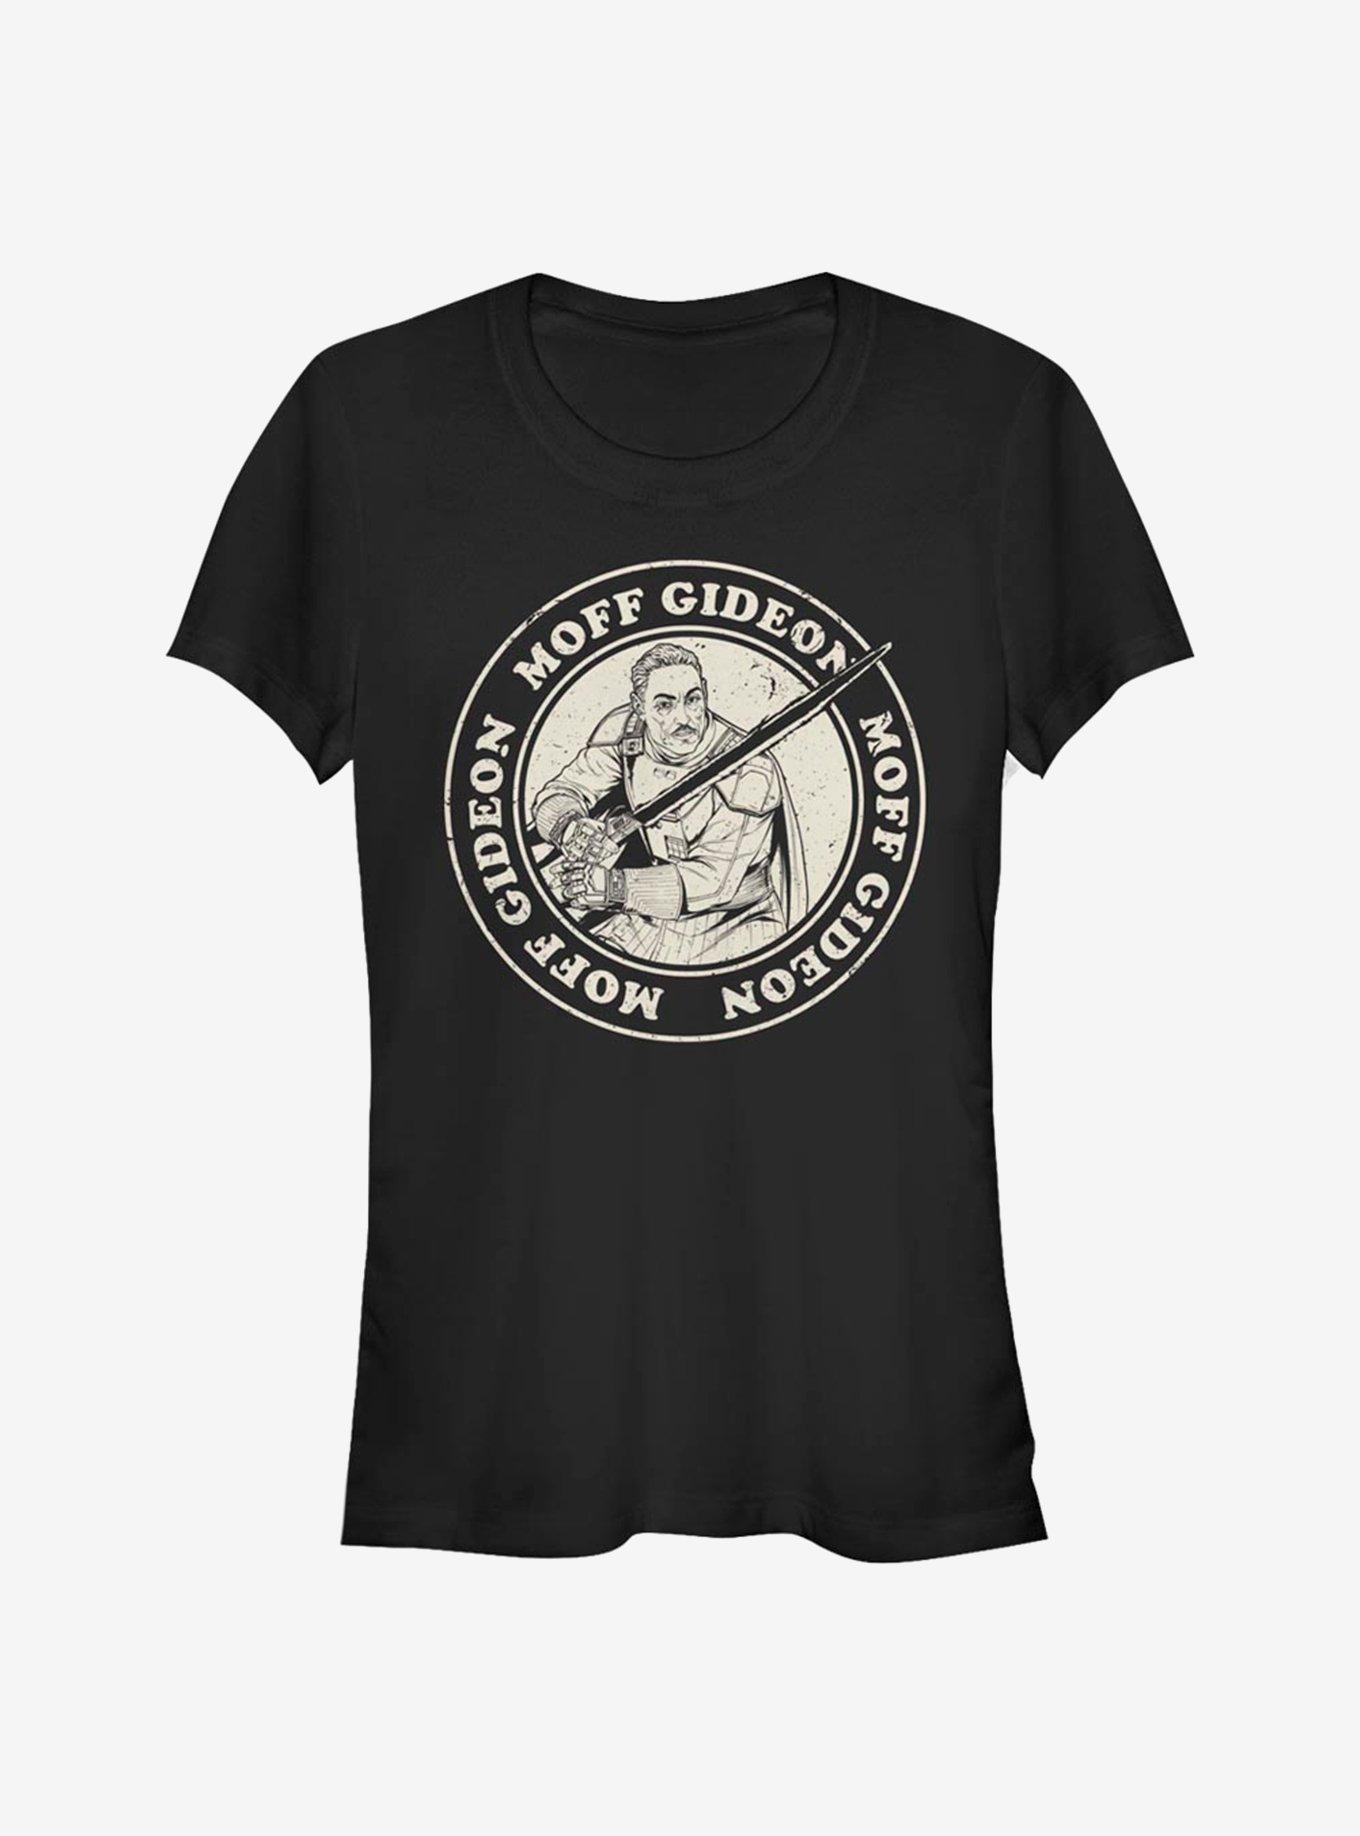 Star Wars The Mandalorian Moff Gideon Circle Girls T-Shirt